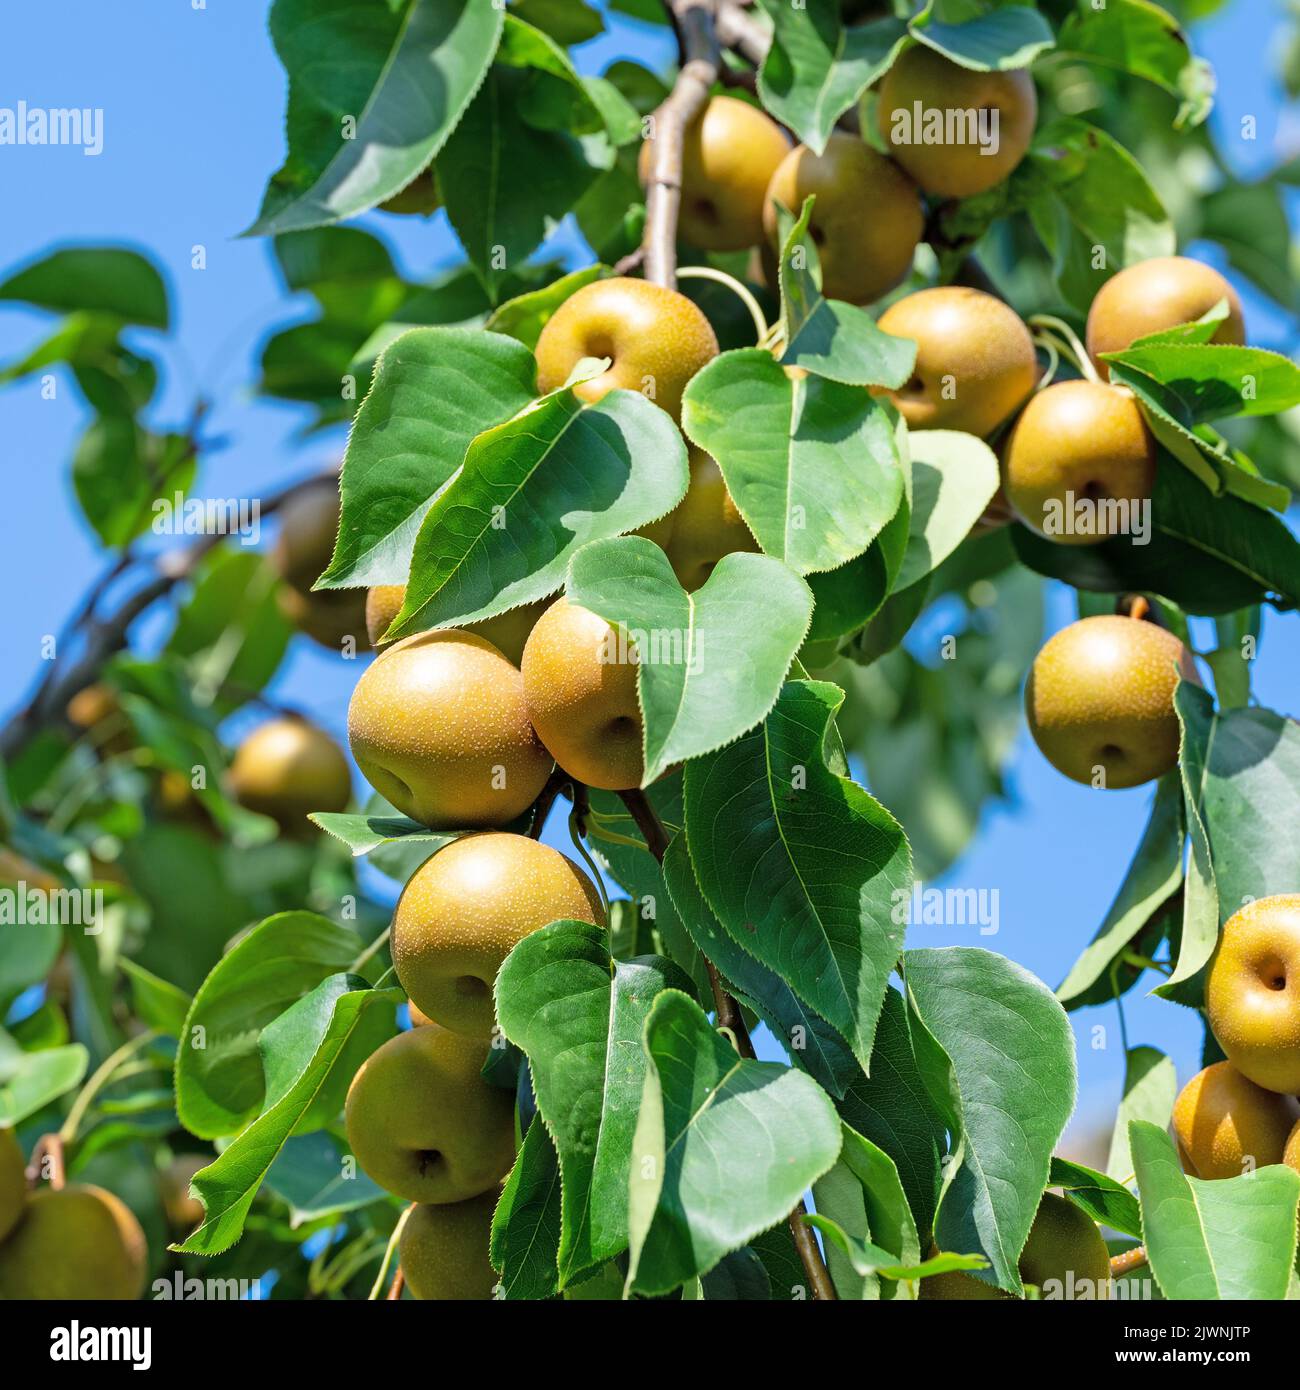 Nashi pears, Pyrus pyrifolia, on the tree Stock Photo